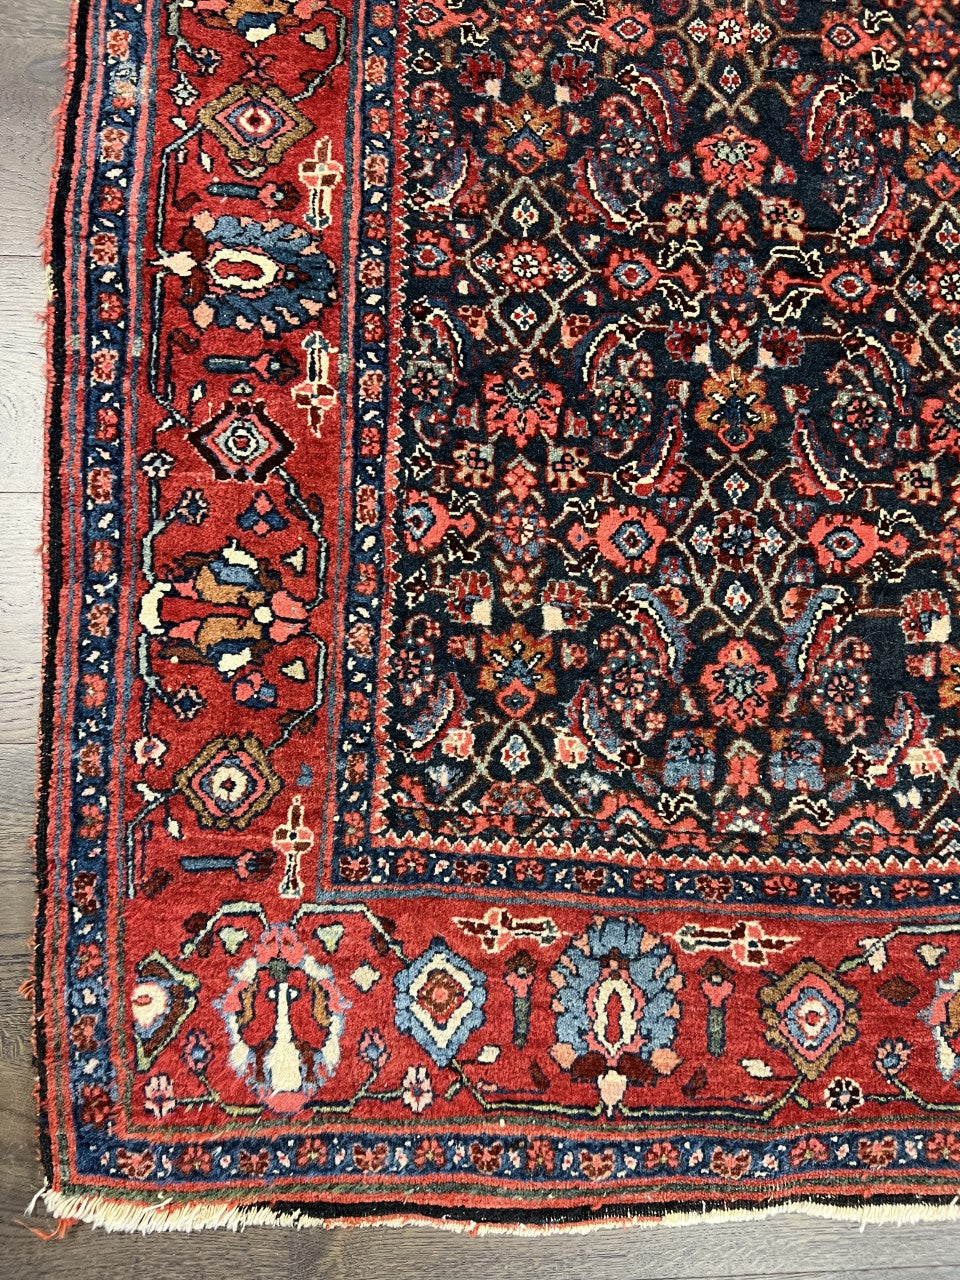 Beautiful old antique decorative Bijar rug - Hakiemie Rug Gallery